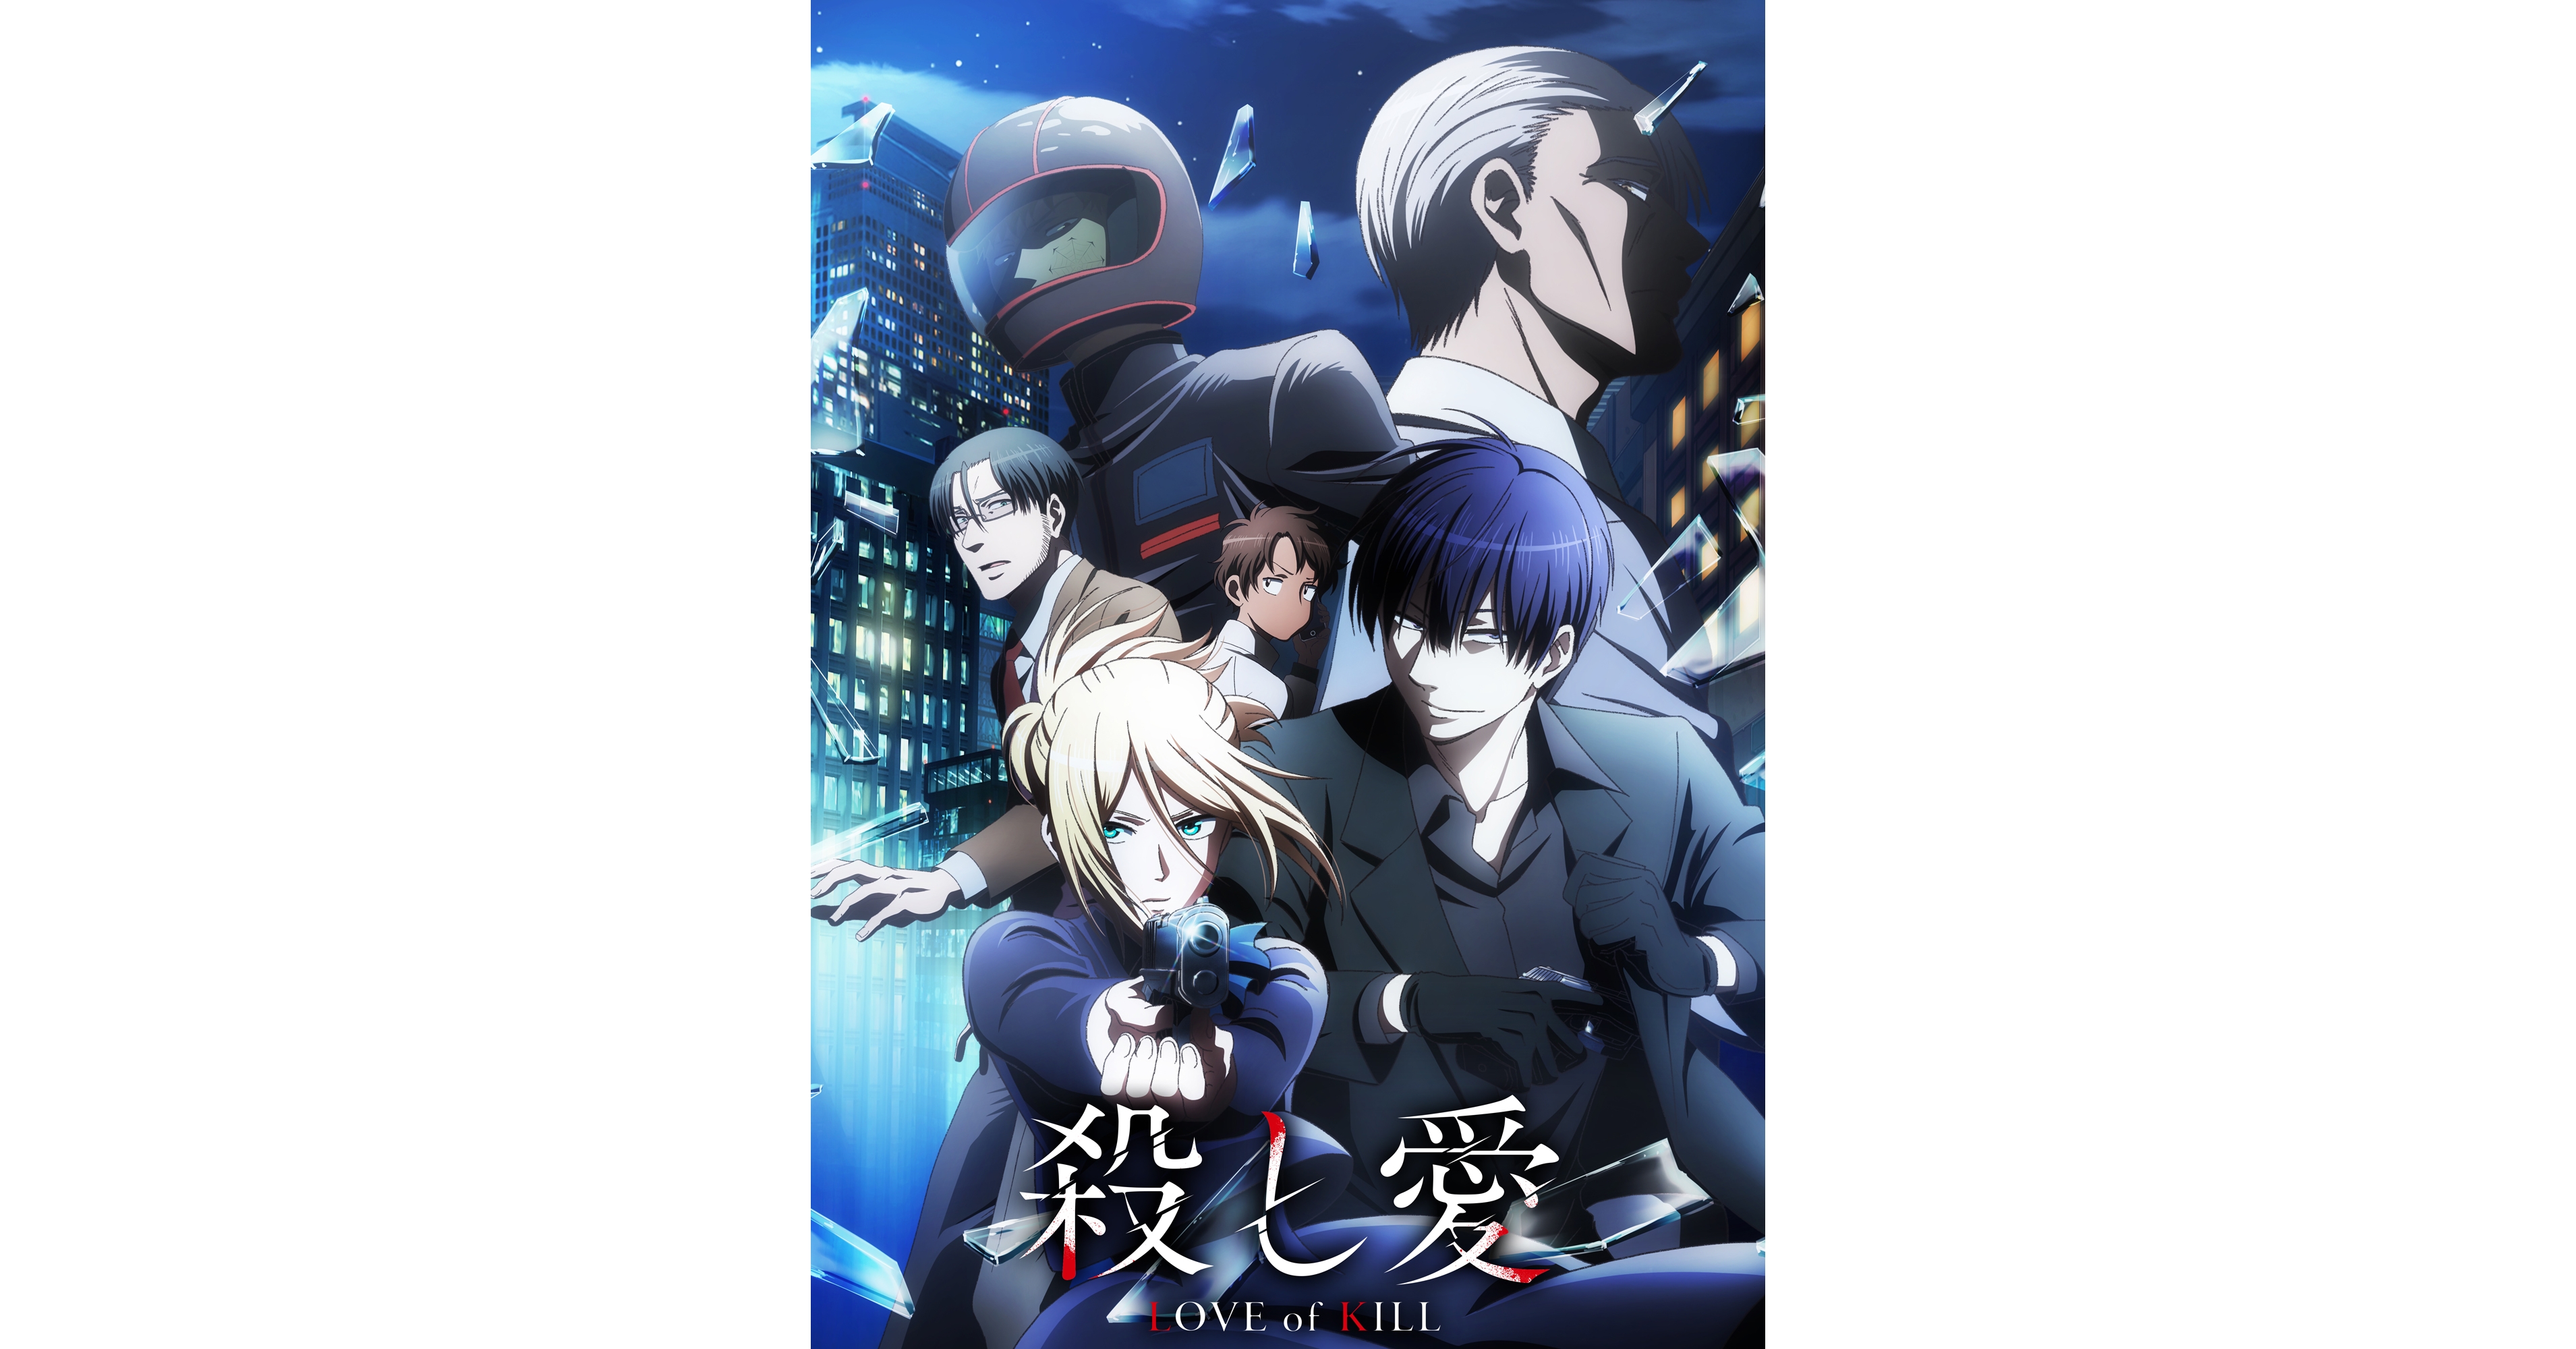 Amyuu's Kono Oto Tomare! Manga Receives TV Anime Adaptation - THE MAGIC RAIN